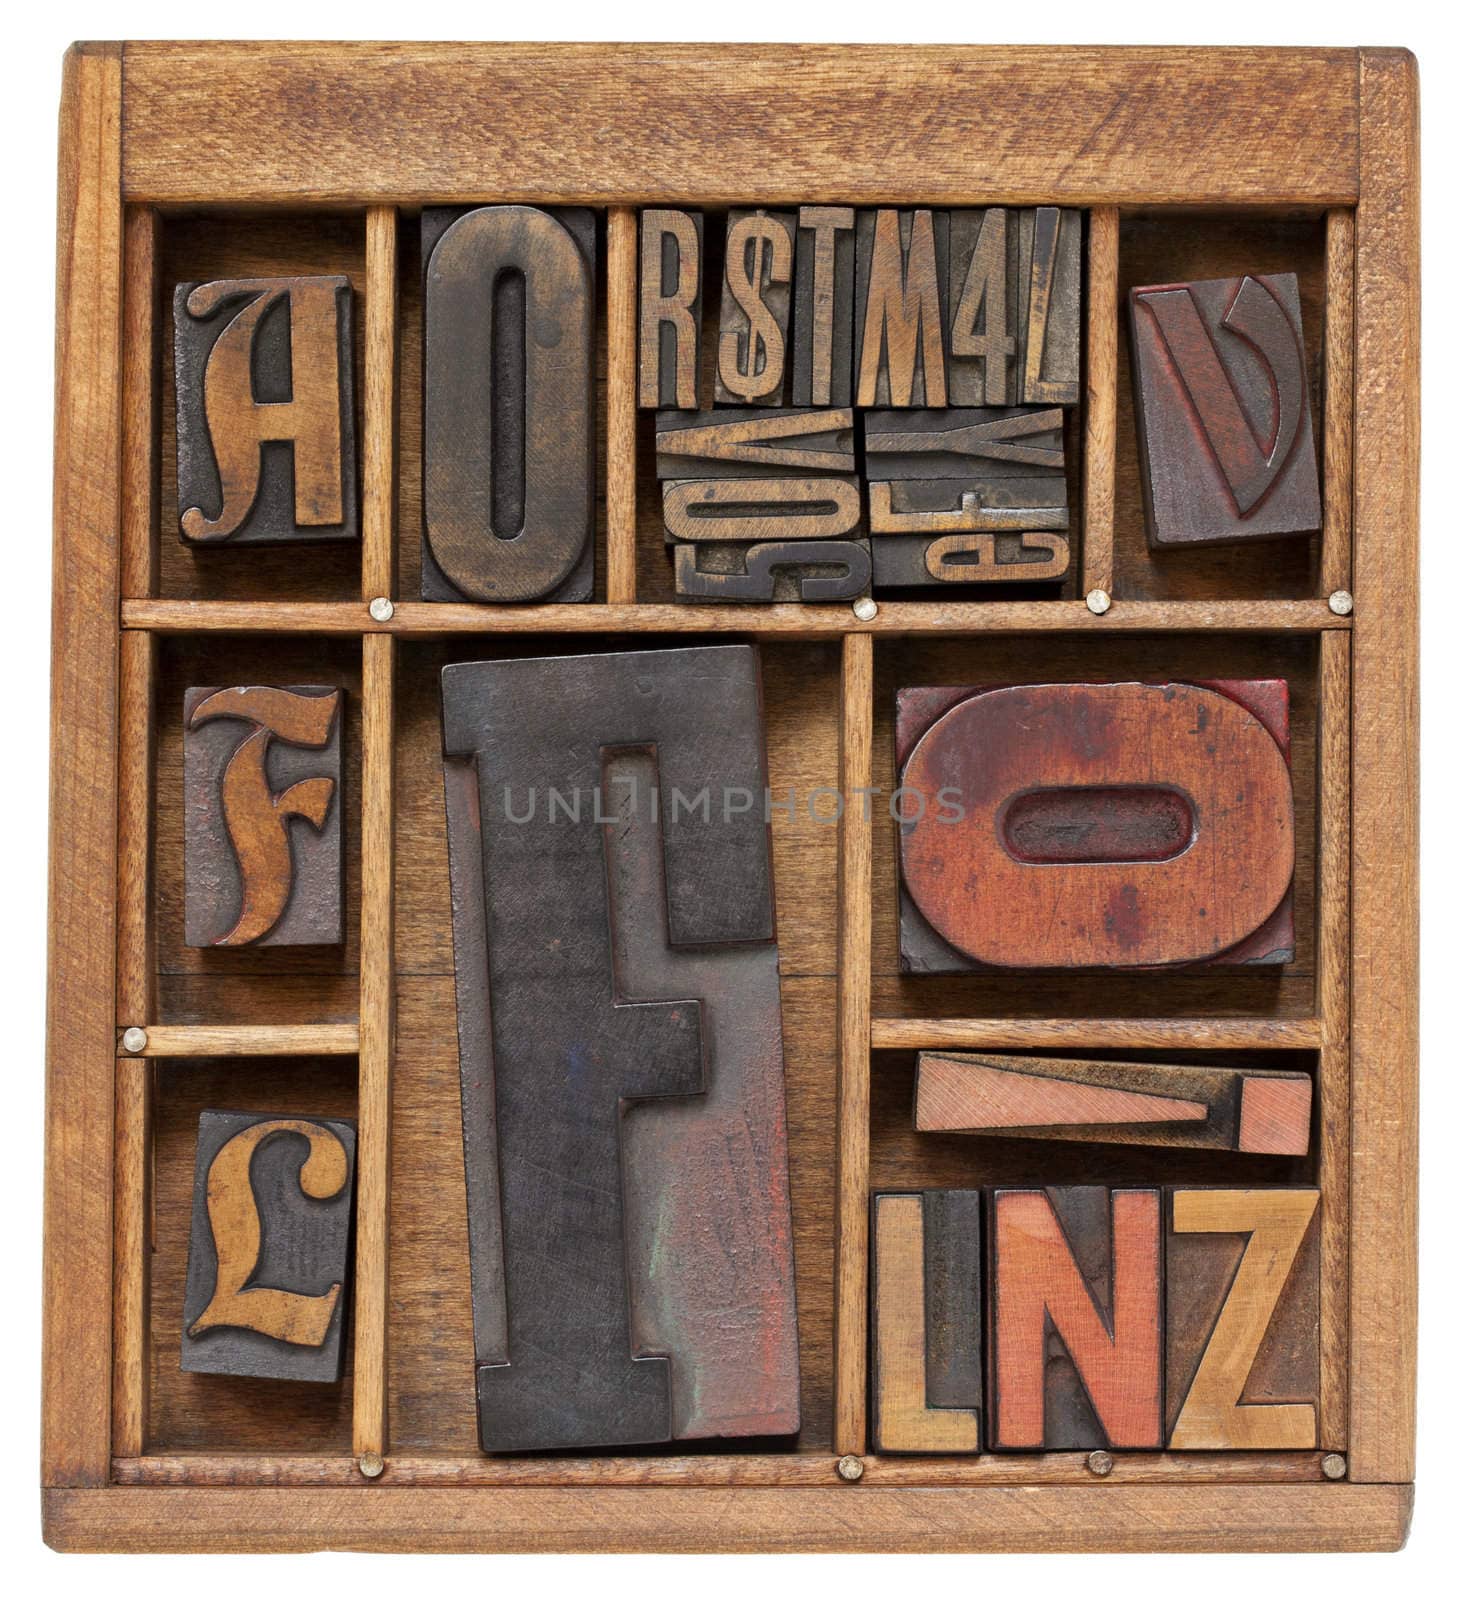 antique letterpress type by PixelsAway